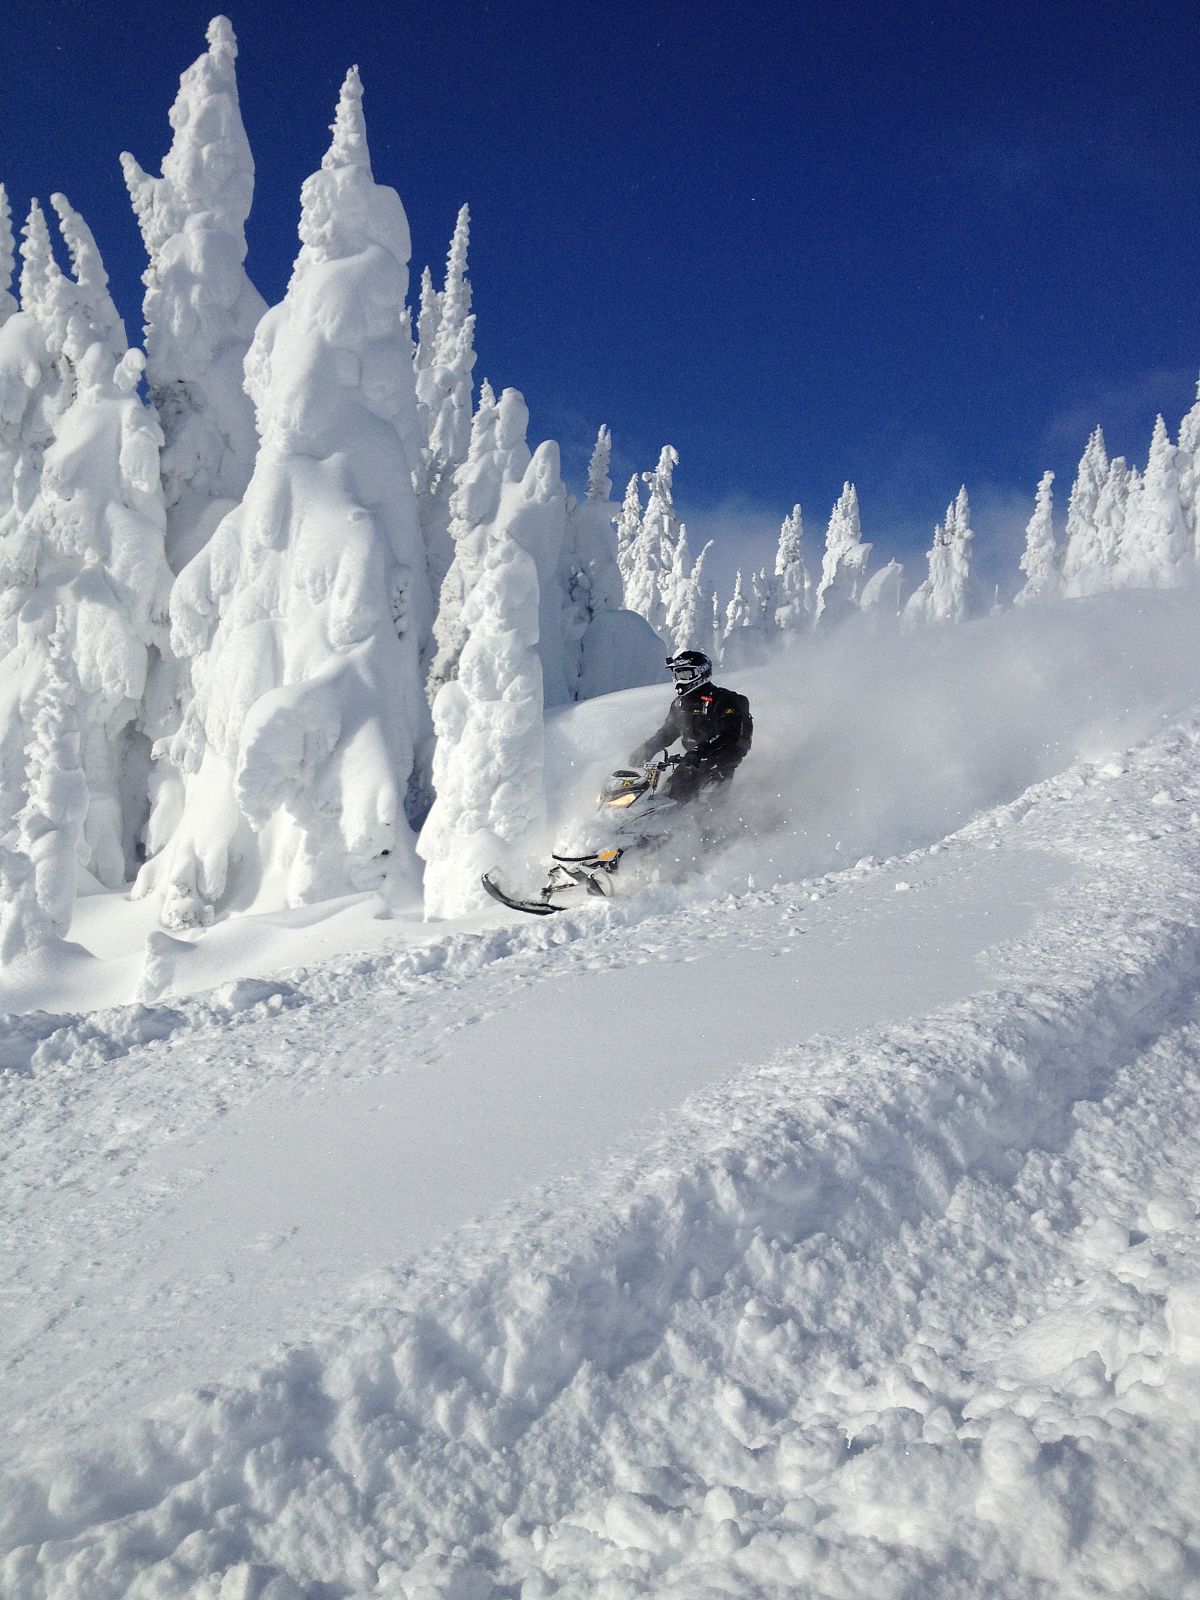 Jordan Wittke sledding with the snow ghosts